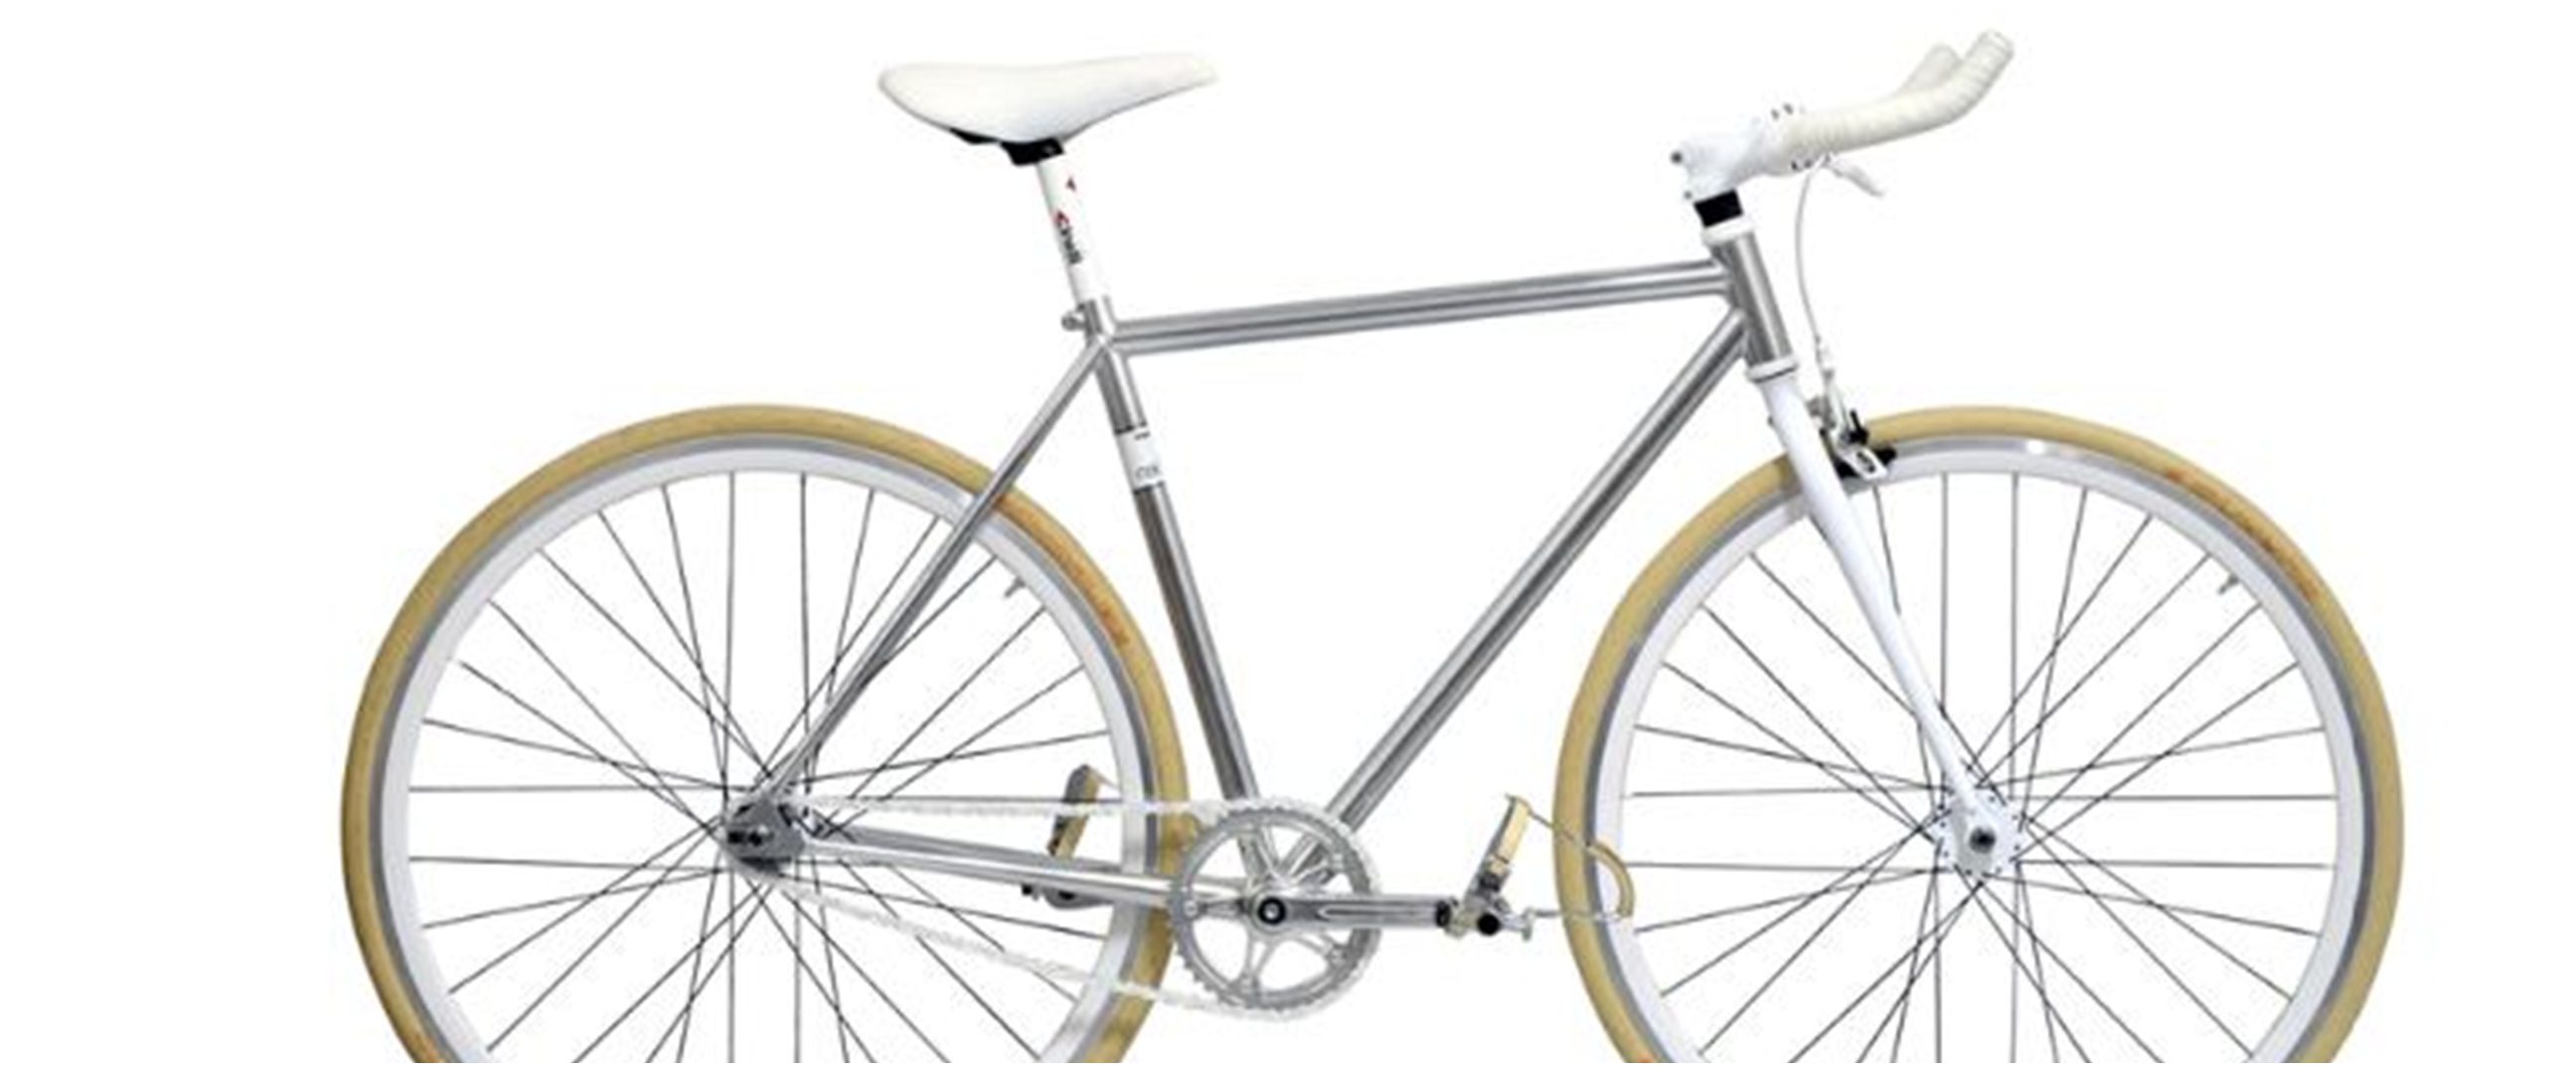 Harga sepeda Polygon Fixie Zenith FX dan spesifikasinya, kuat & kokoh